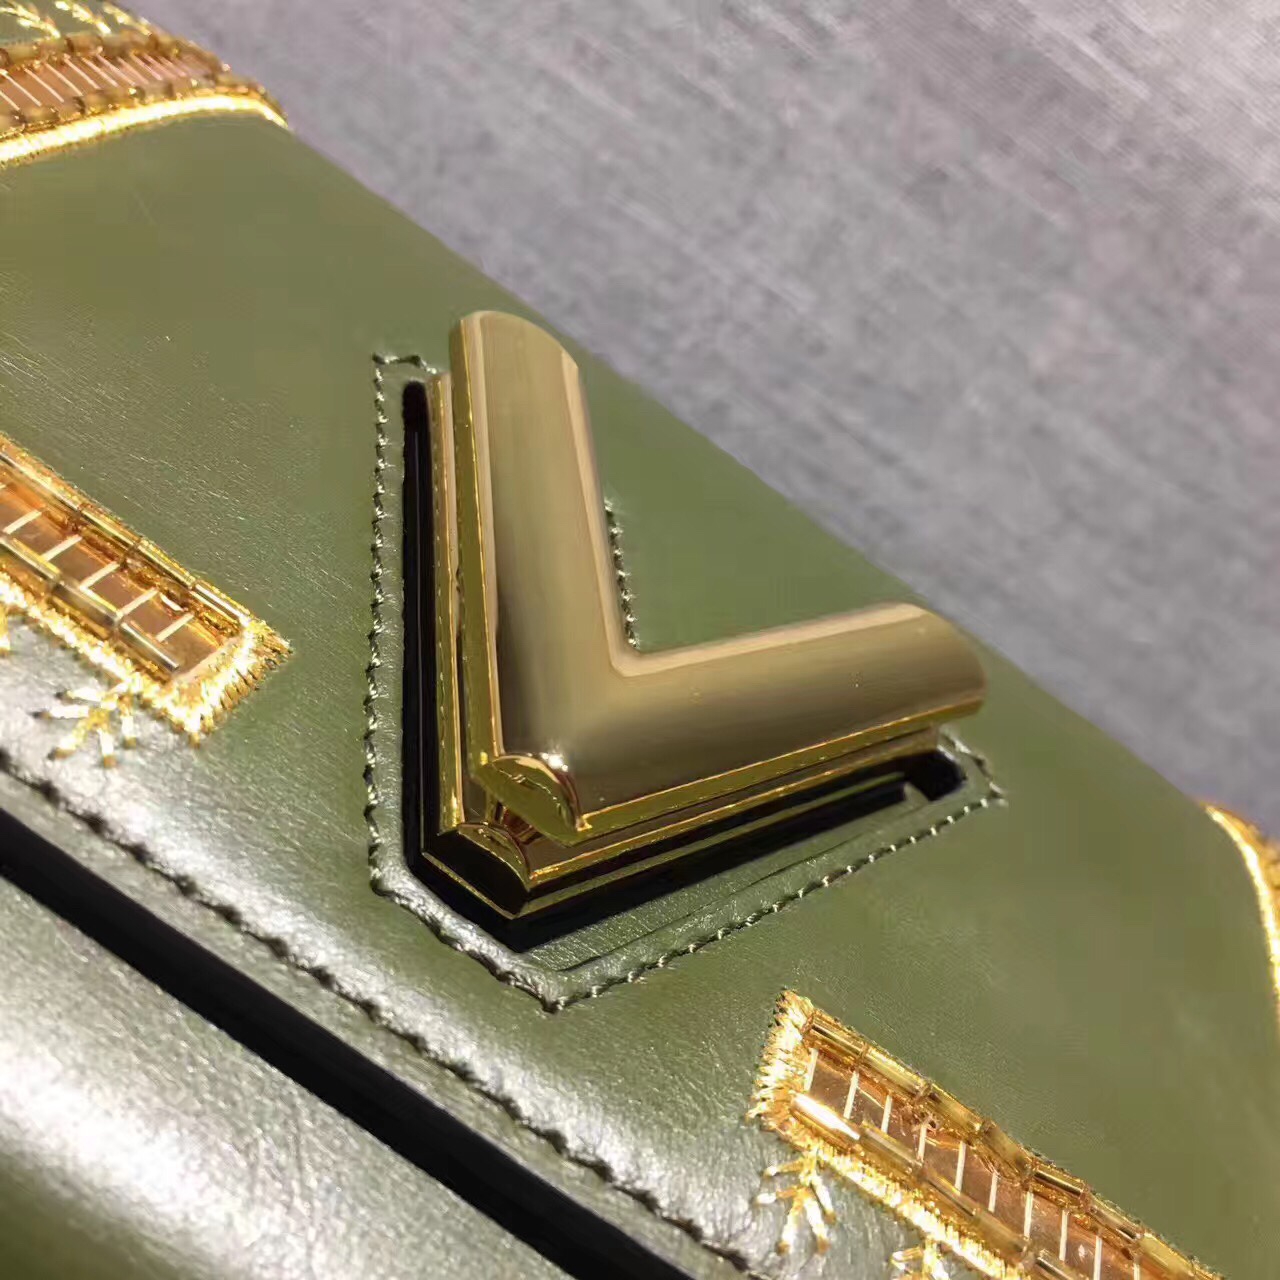  Túi xách Louis Vuitton Twist siêu cấp - TXLV117